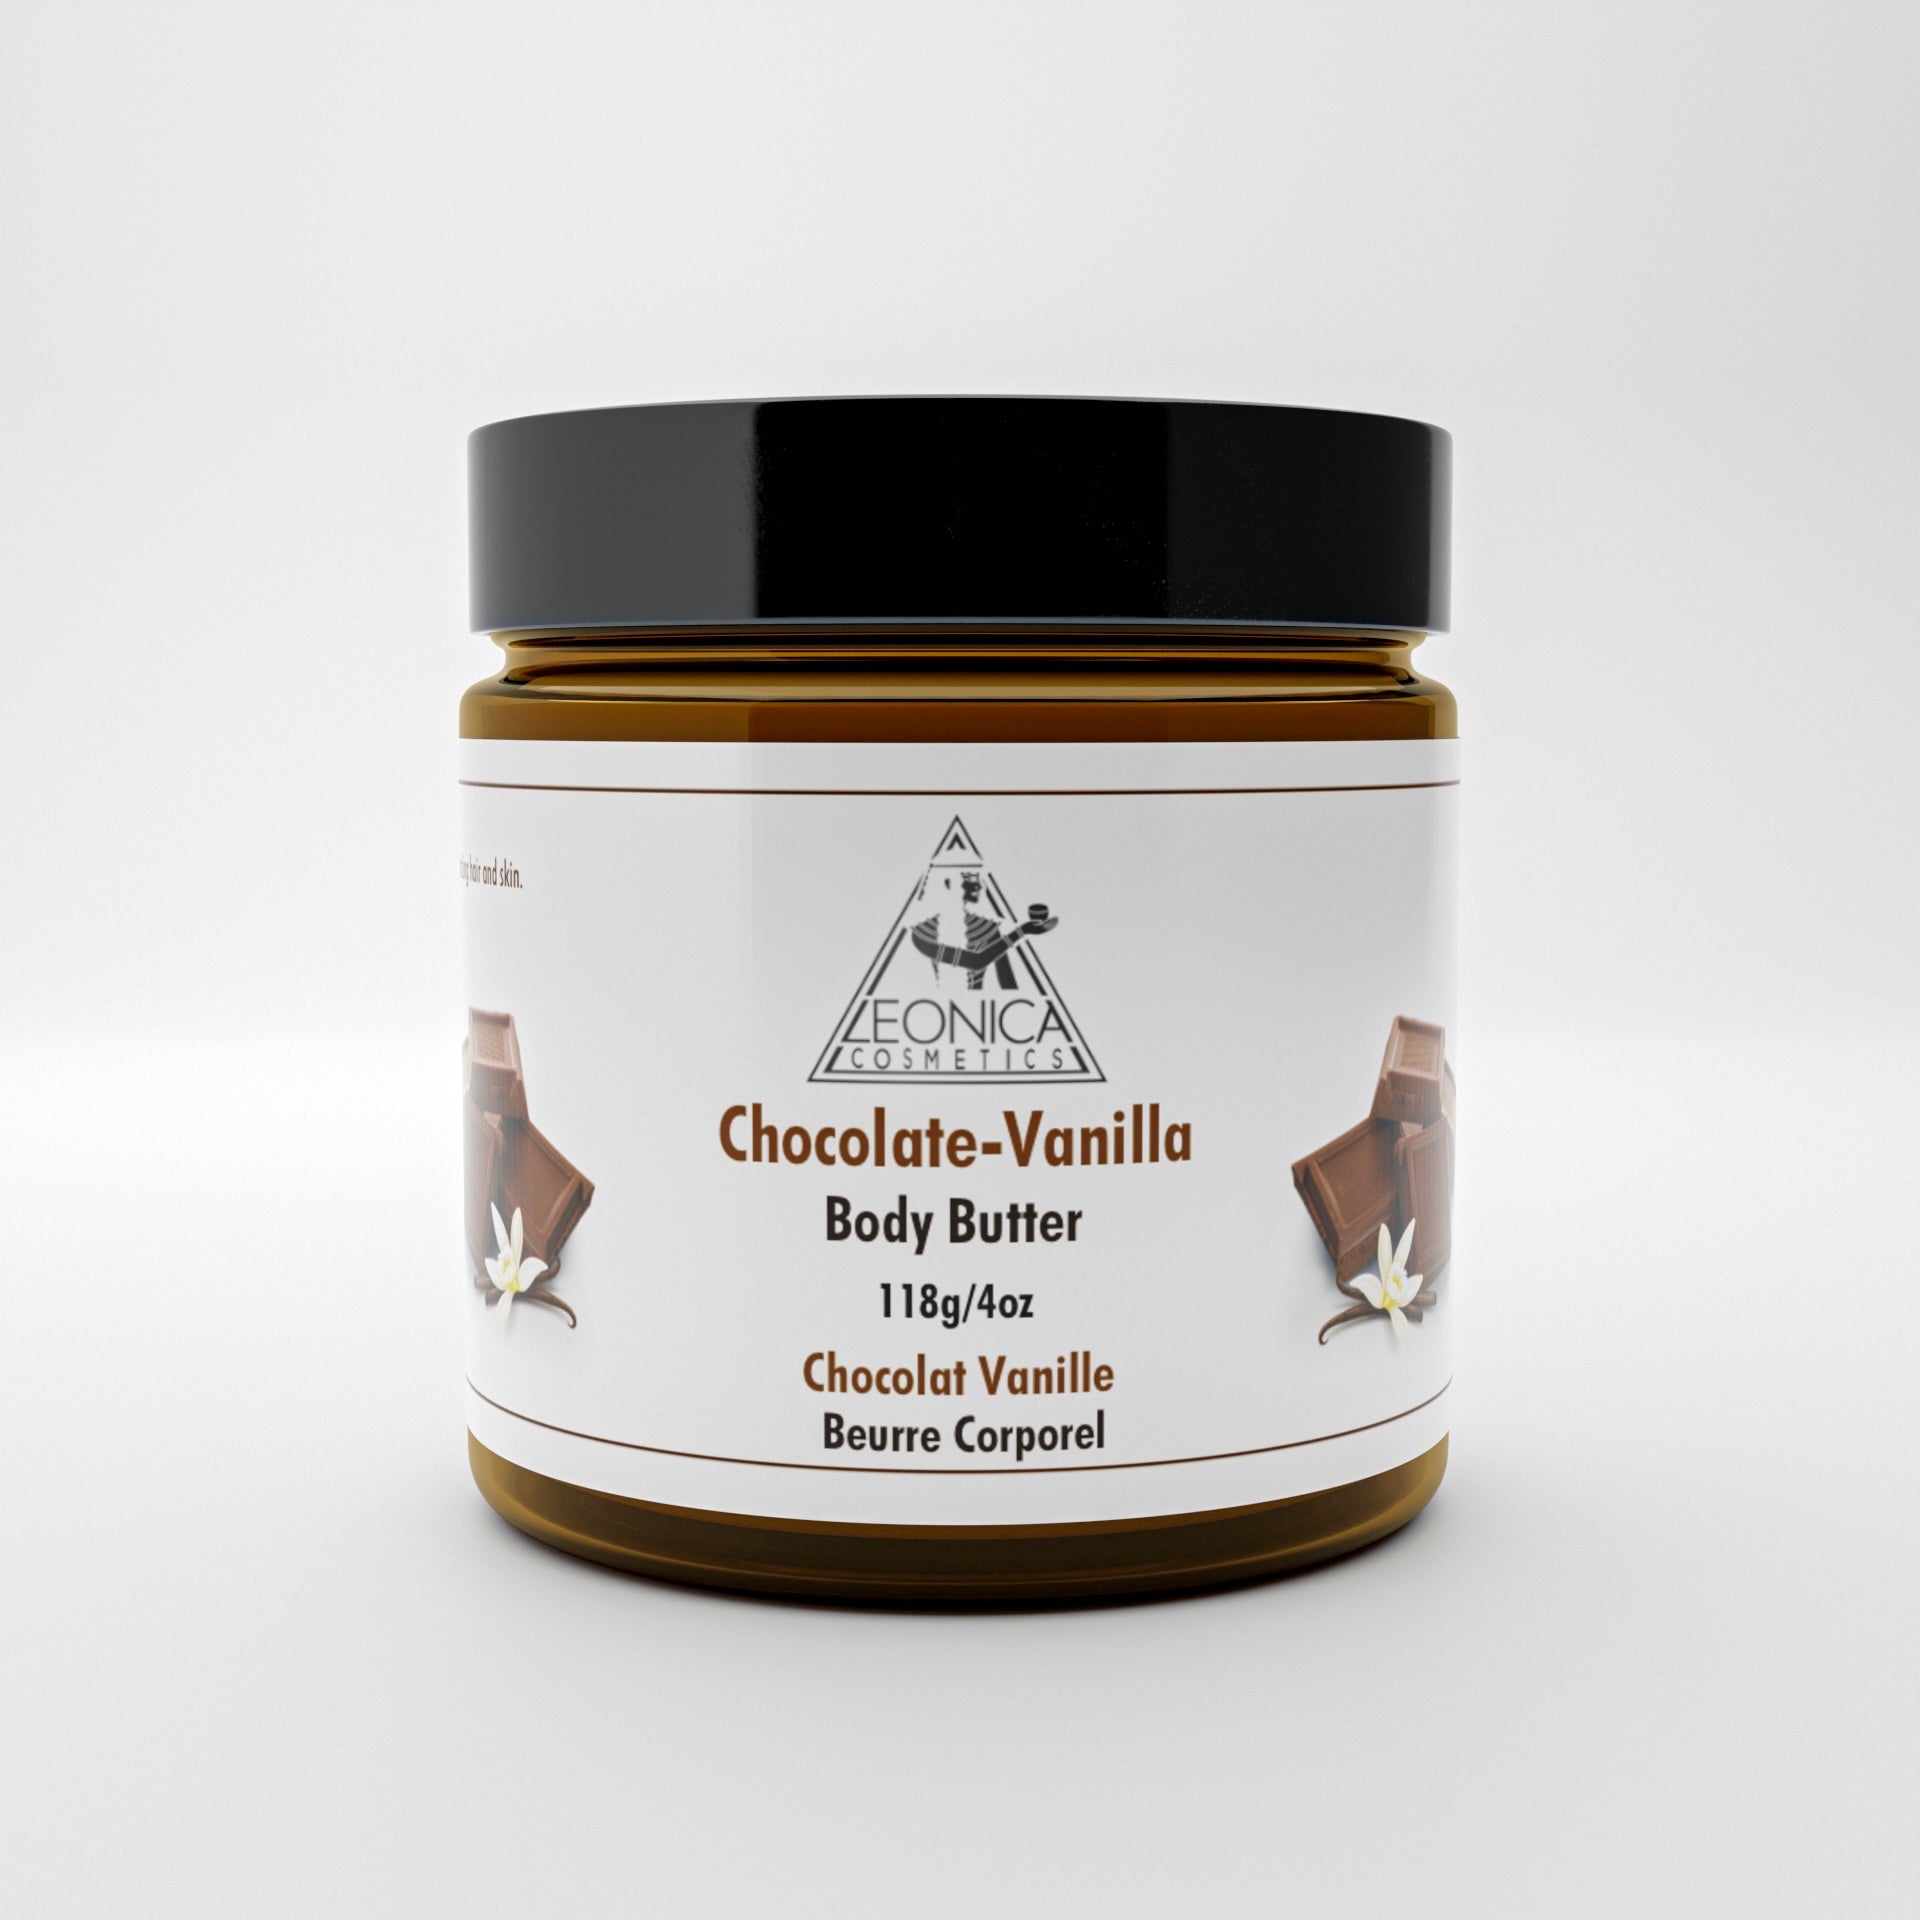 Chocolate-Vanilla Body Butter